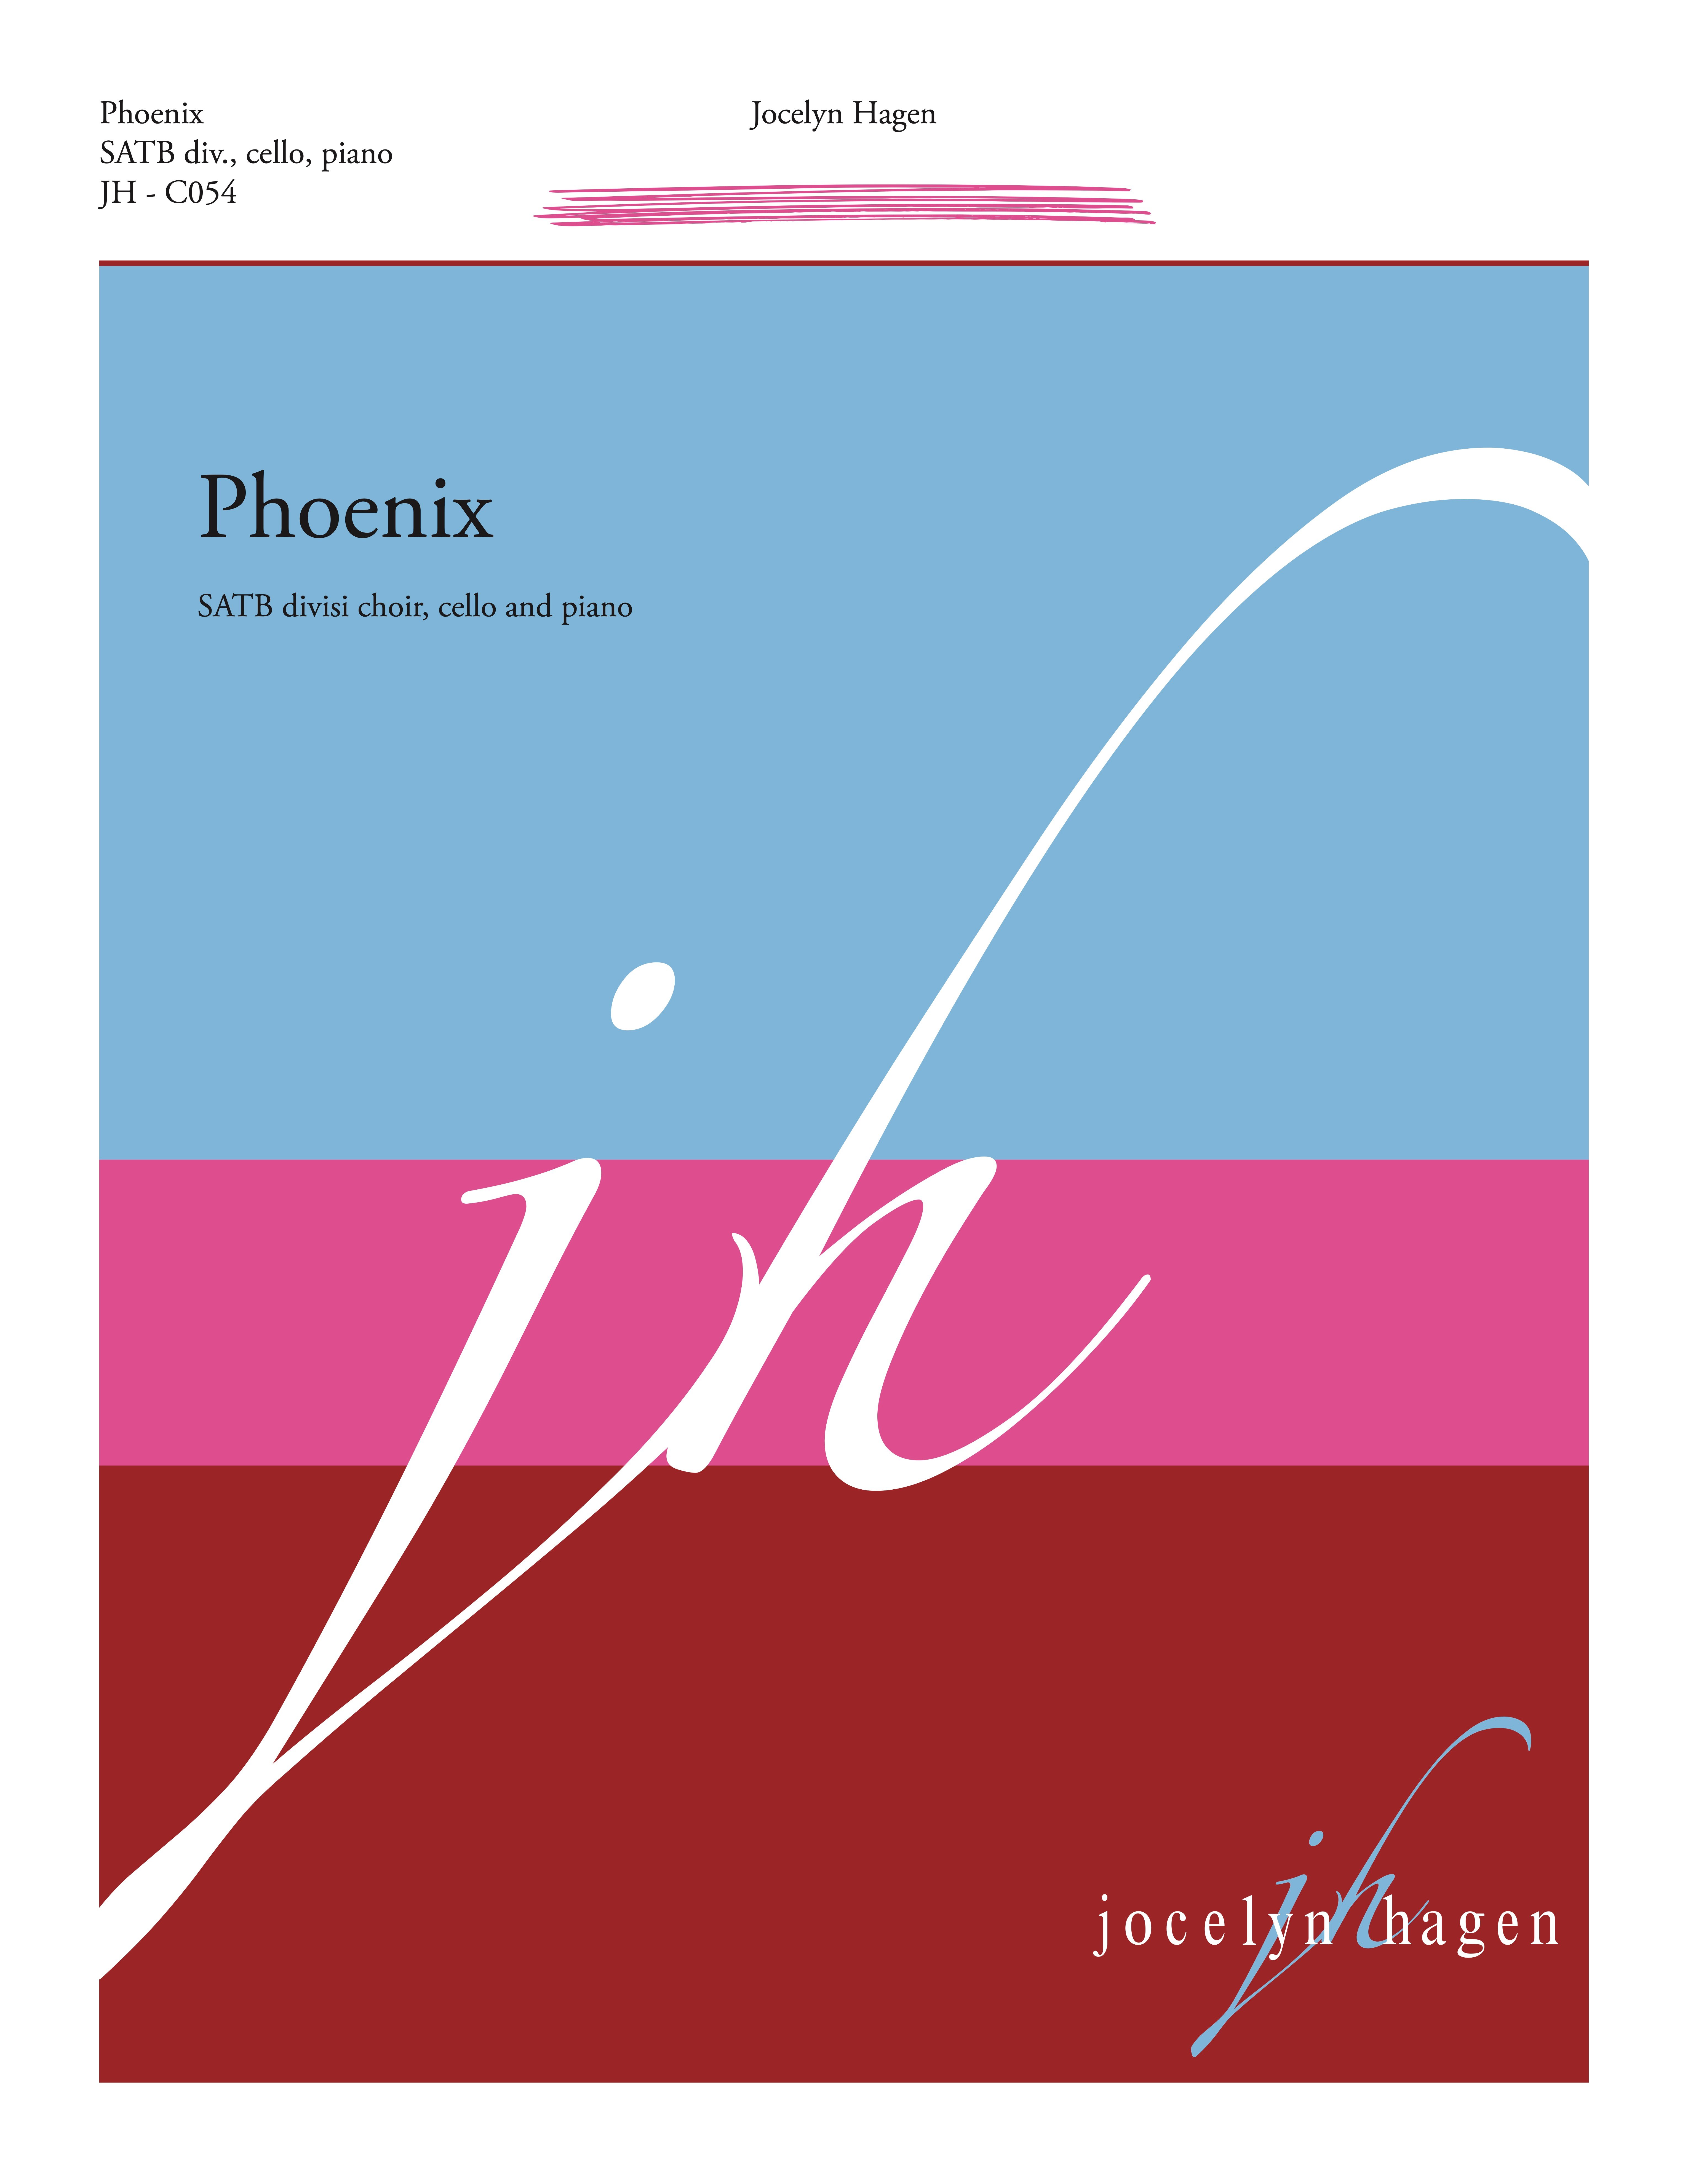 Phoenix community sheet music cover